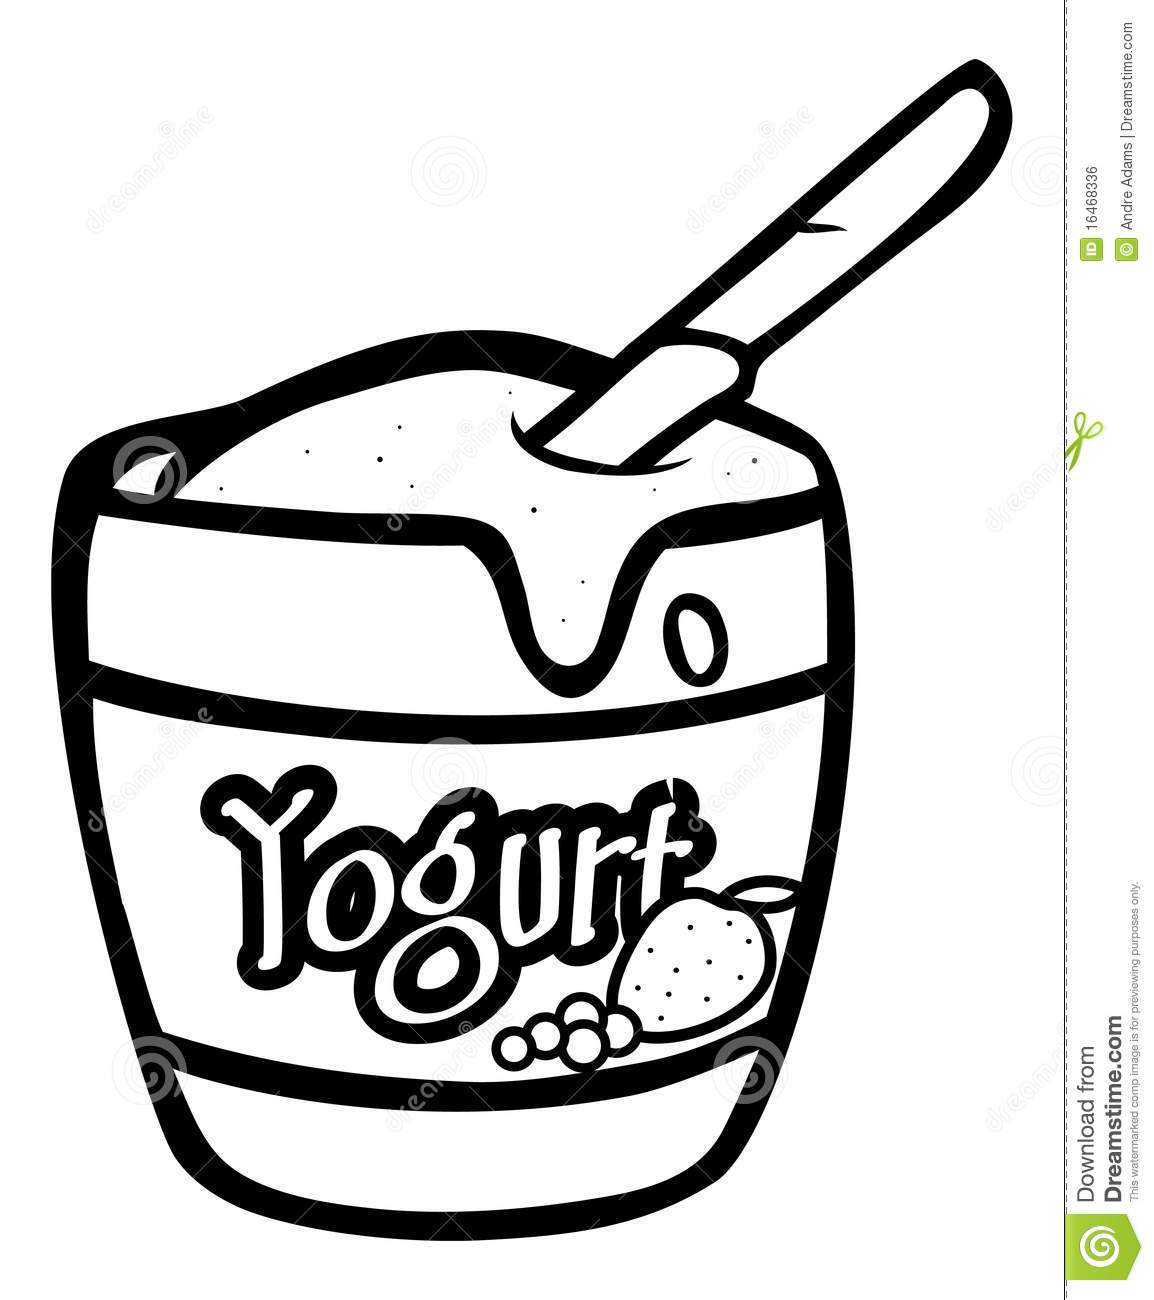 Yogurt clipart free 5 » Clipart Portal.